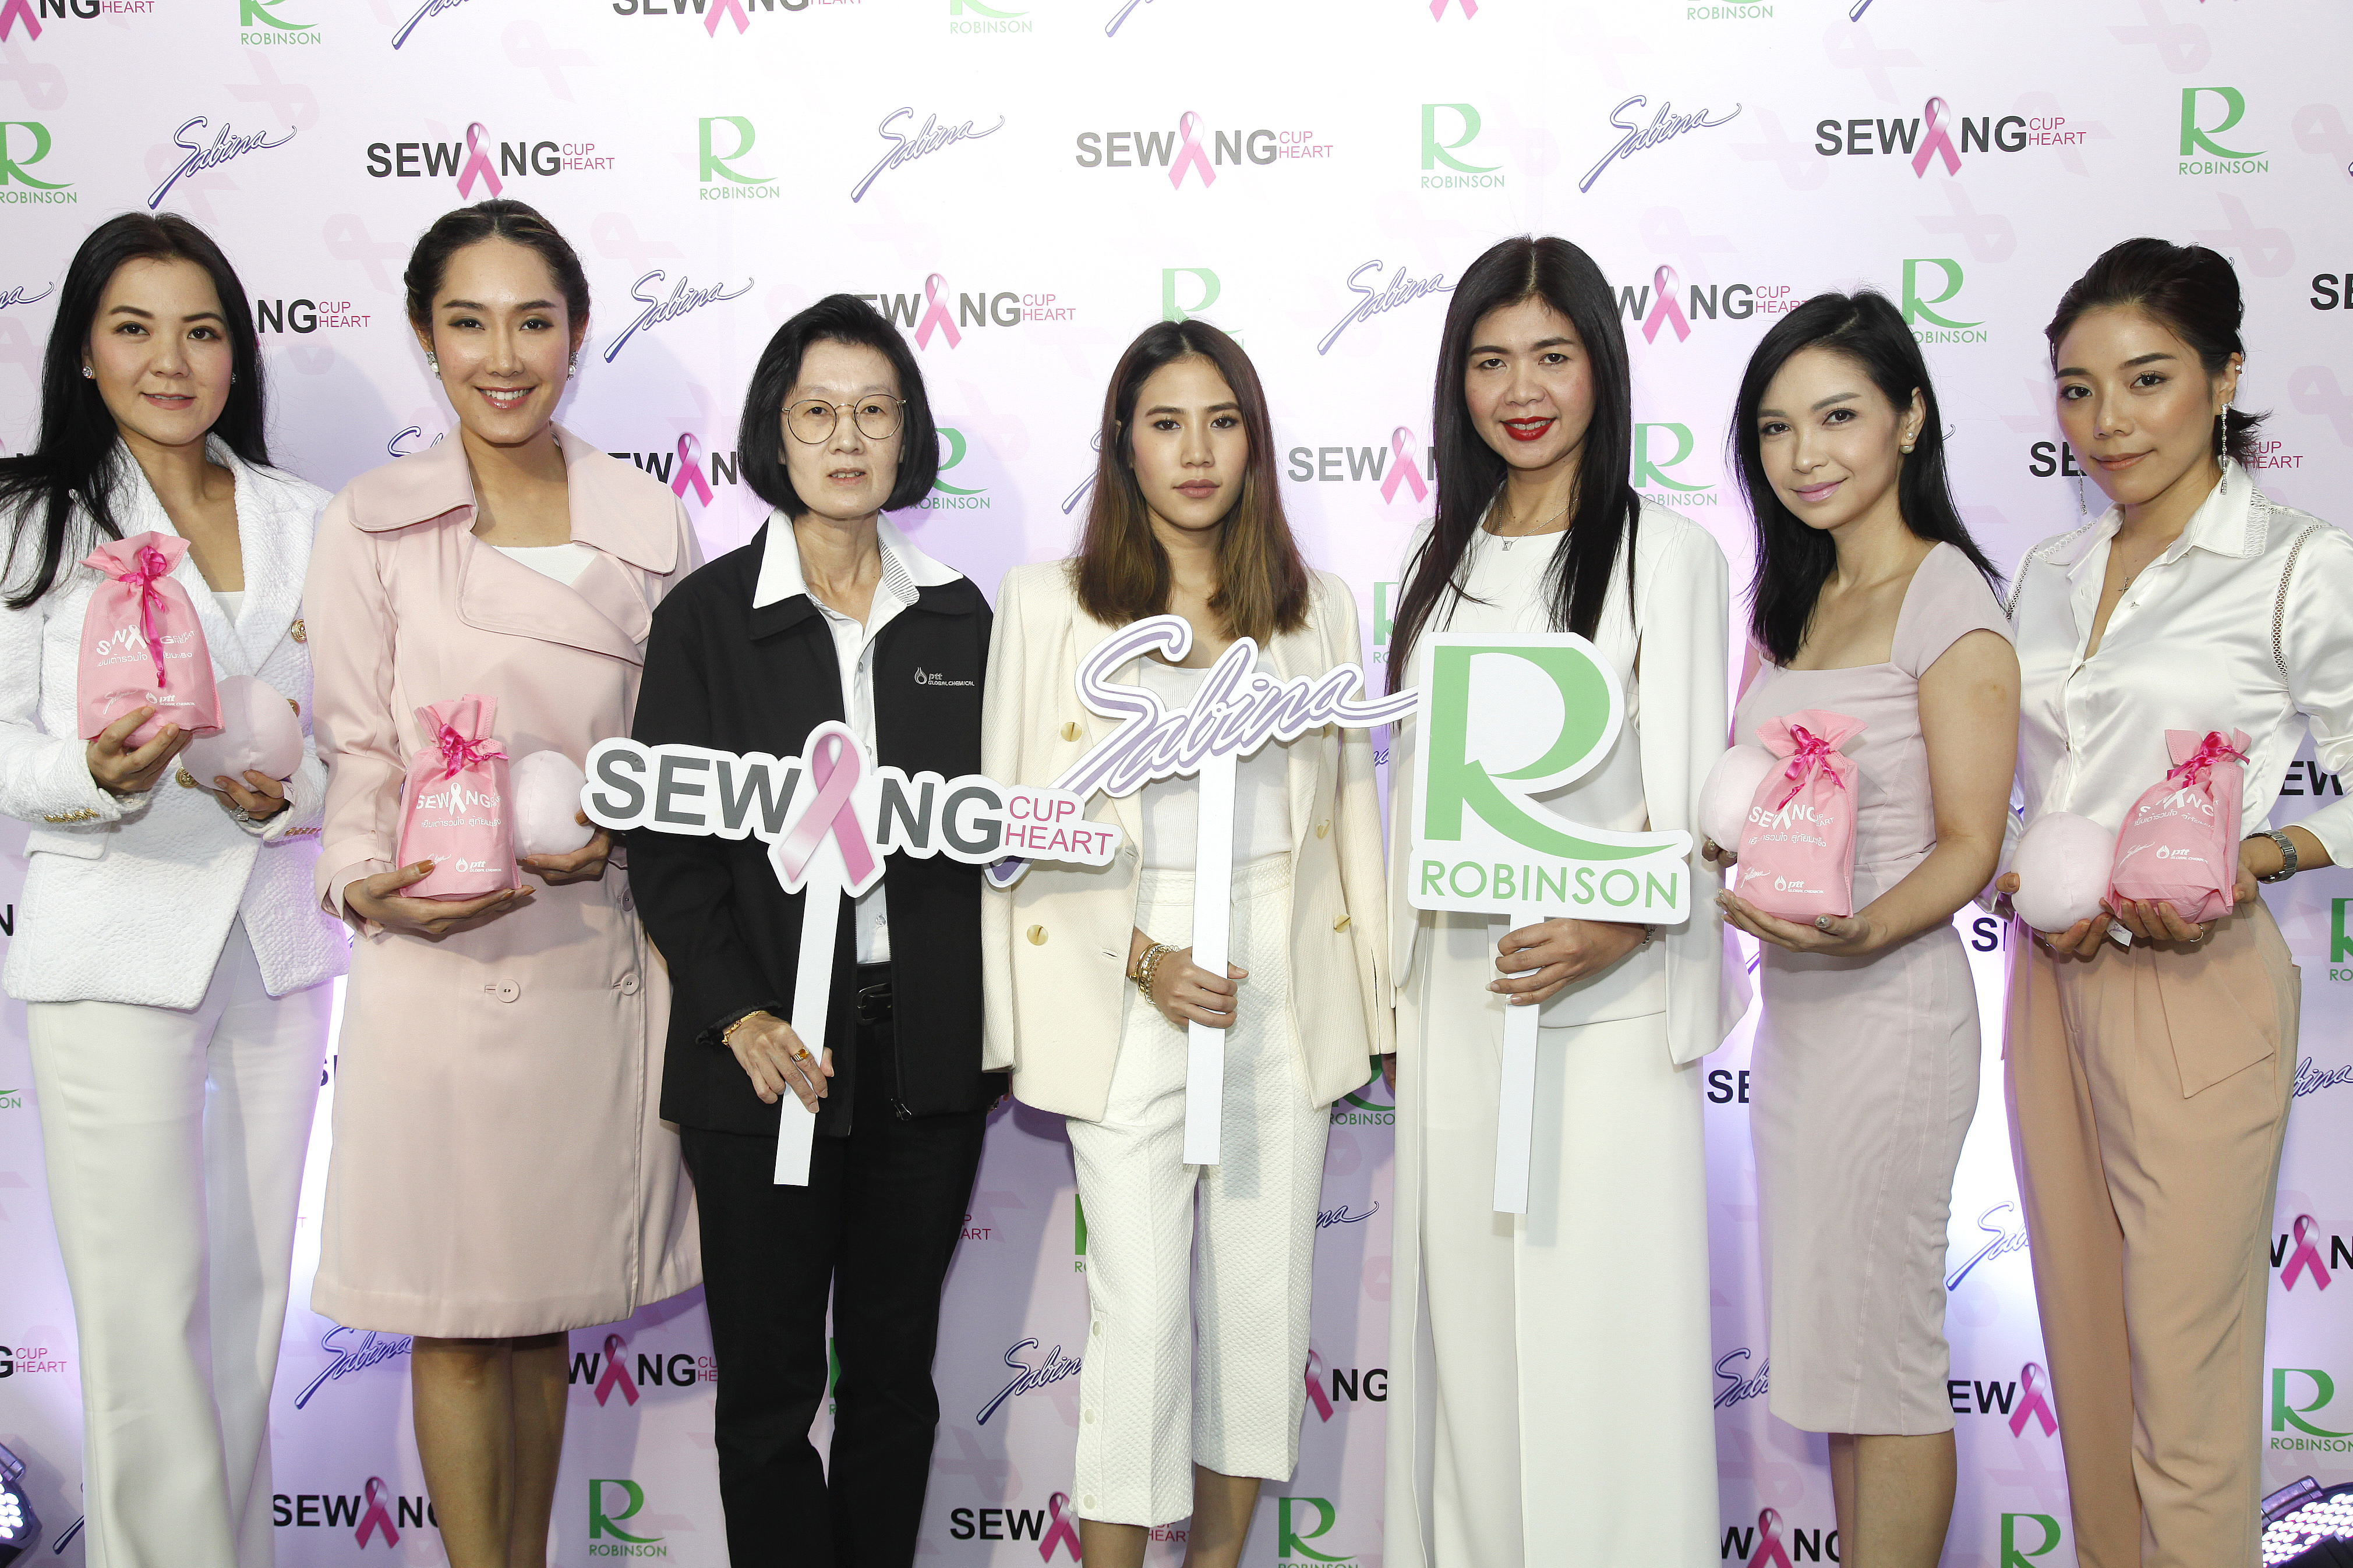 Sabina Sewing Cup Sewing Heart เย็บเต้าเติมใจ สู้ภัยมะเร็ง ปีที่ 11 (13/11/2017)